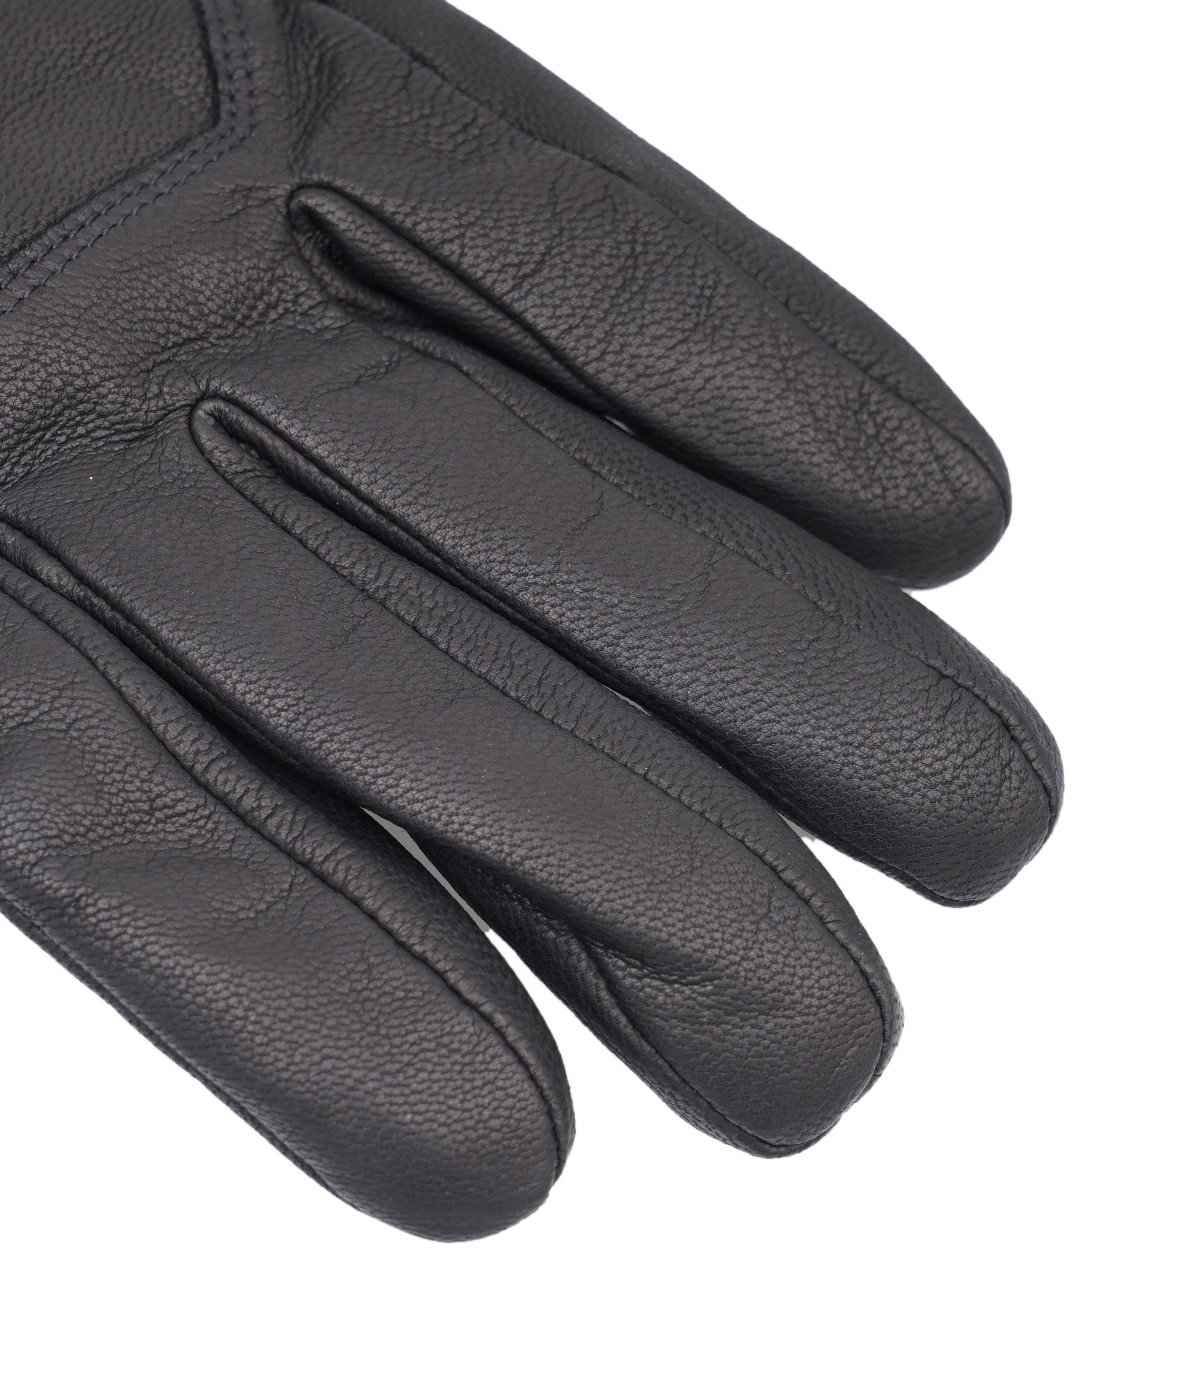 Workman Glove | CANADA GOOSE(カナダグース) / ファッション雑貨 手袋